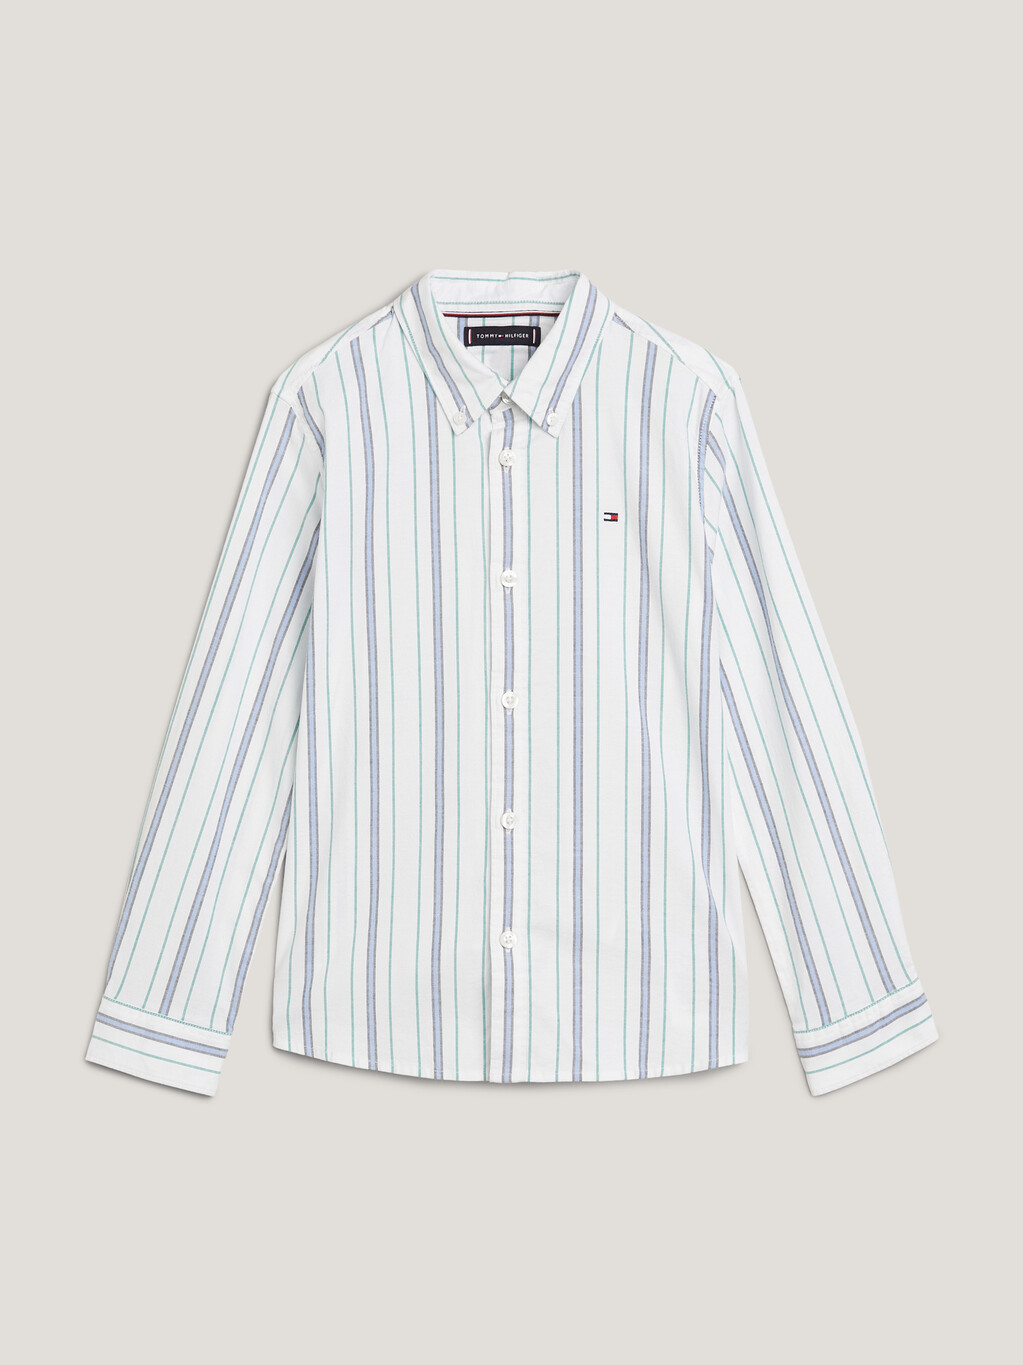 Stripe Oversized Fit Oxford Shirt, Calico/Rwb Stripe, hi-res